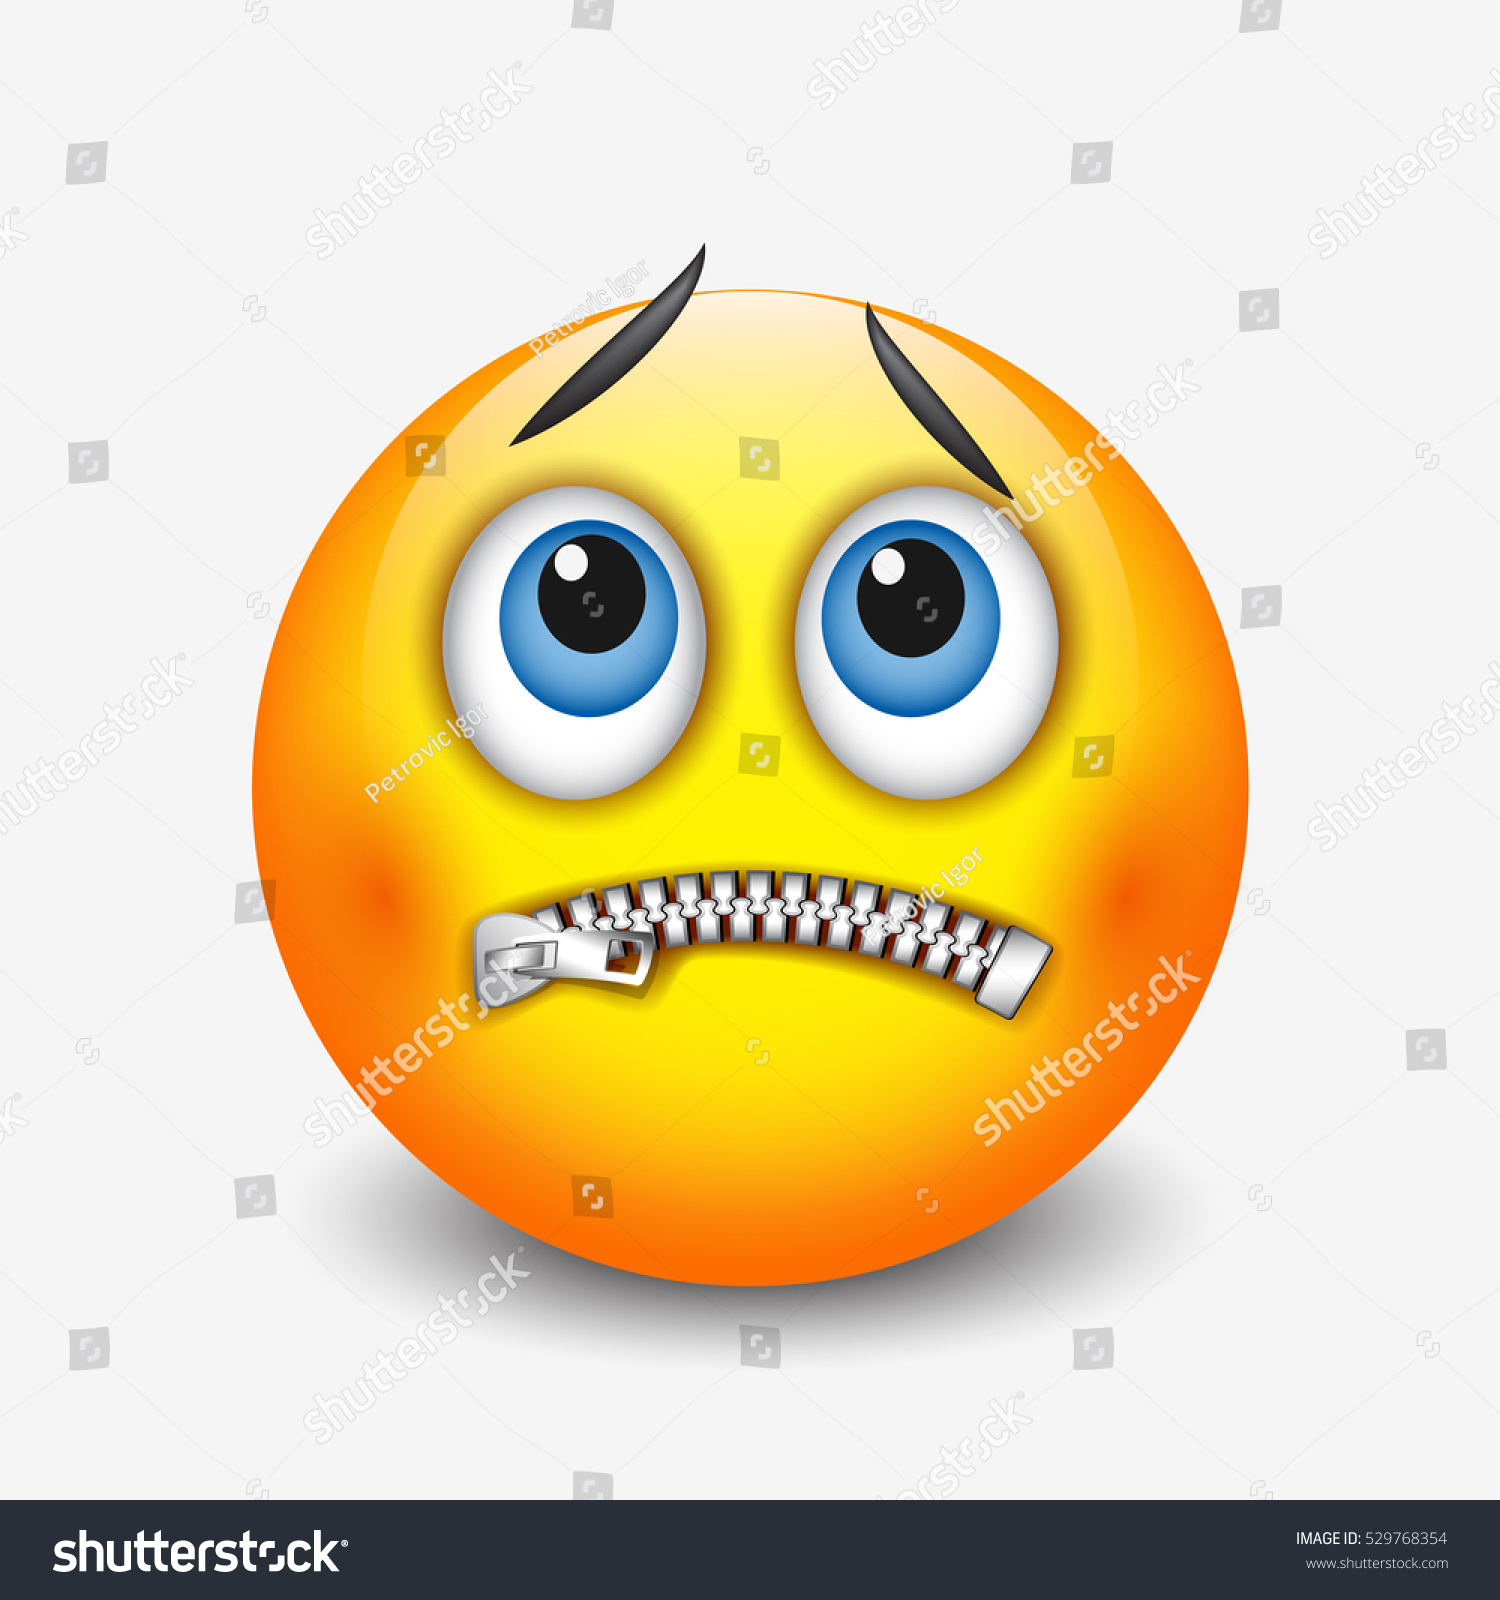 Zipped Mouth Smiley Emoticon Emoji Vector Stock Vector (Royalty Free ...